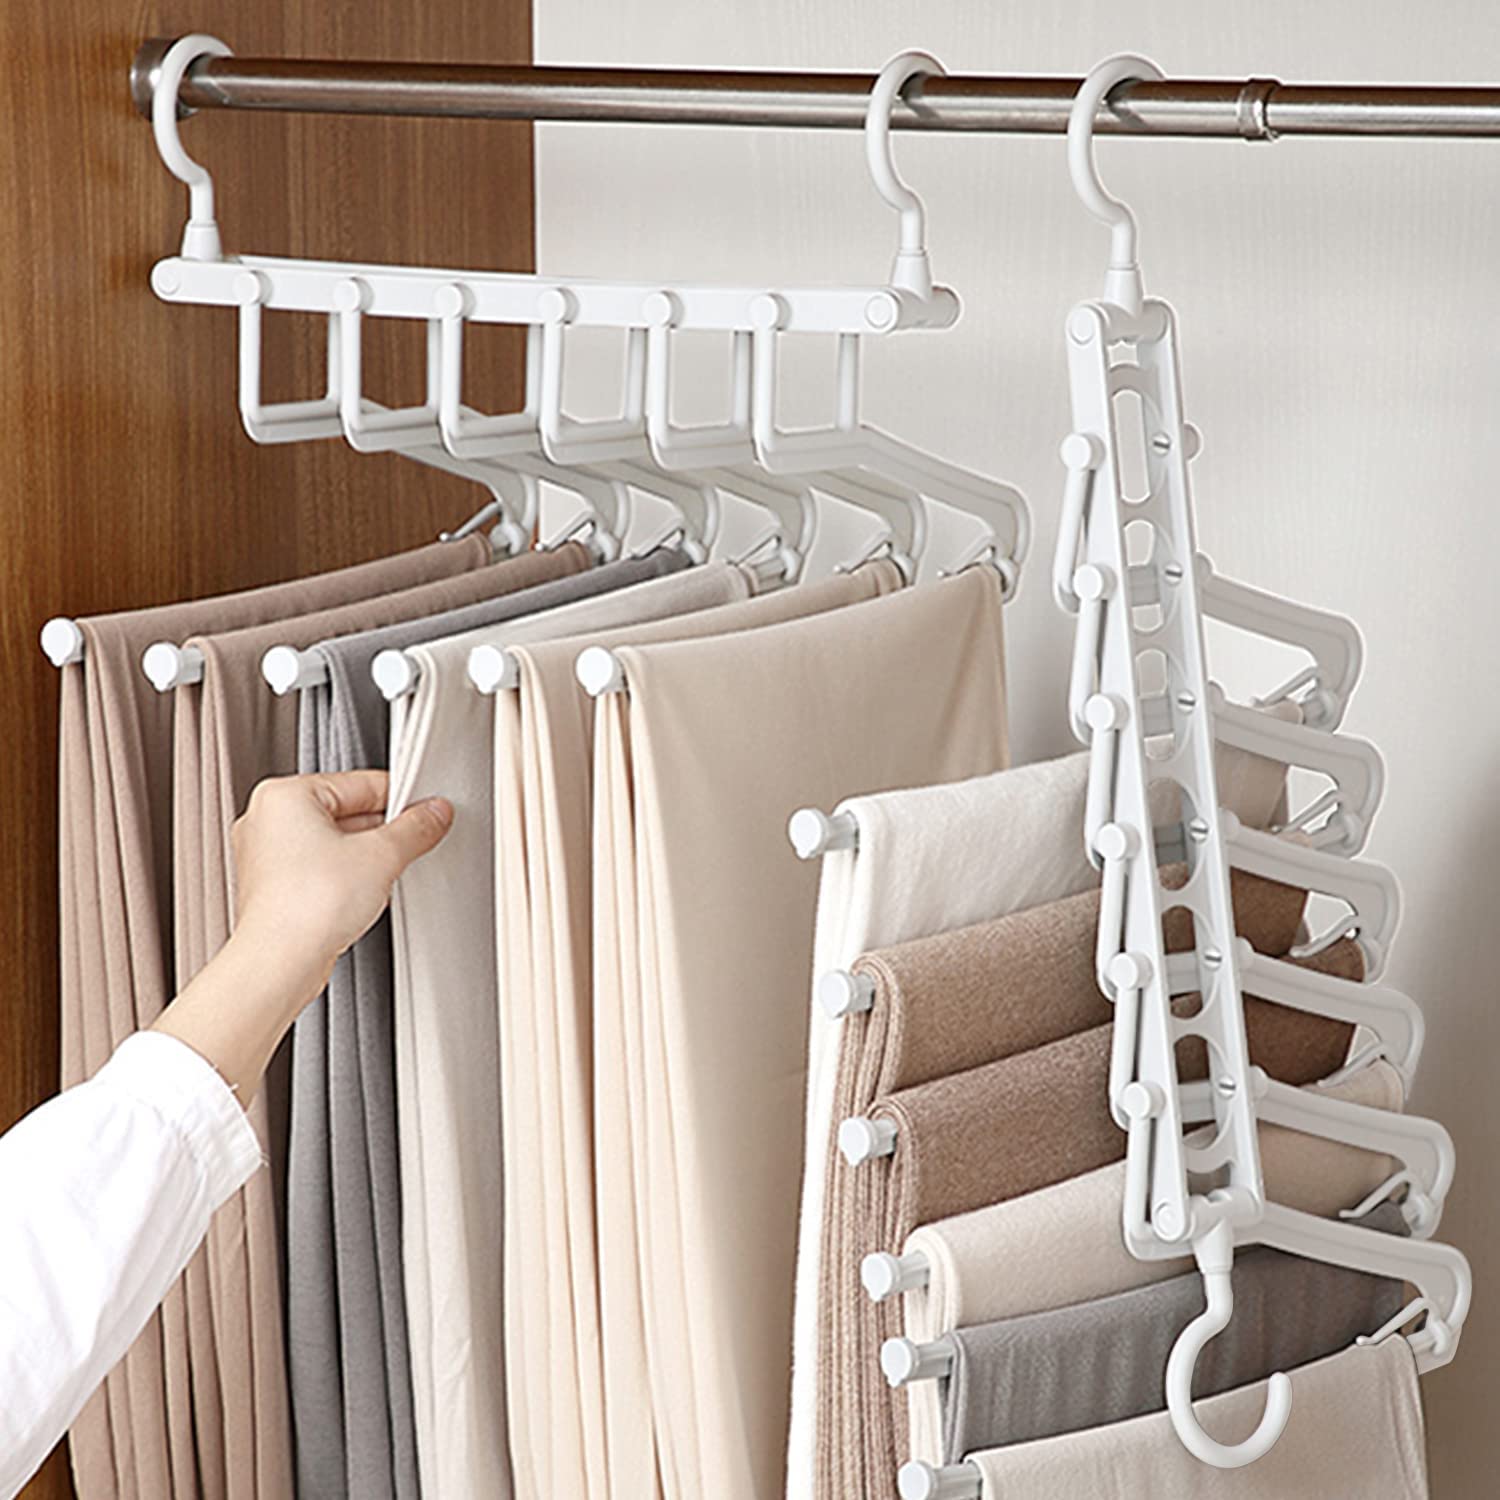 AIR&TREE 2 Pack Pants Hangers Space Saving,Anti-Rust Plastic Hangers,Durable and Sturdy Hangers for Pants Scarf Jeans Slack Trousers Ties Towels,Multiple Pants Hangers 6 in 1 (White)